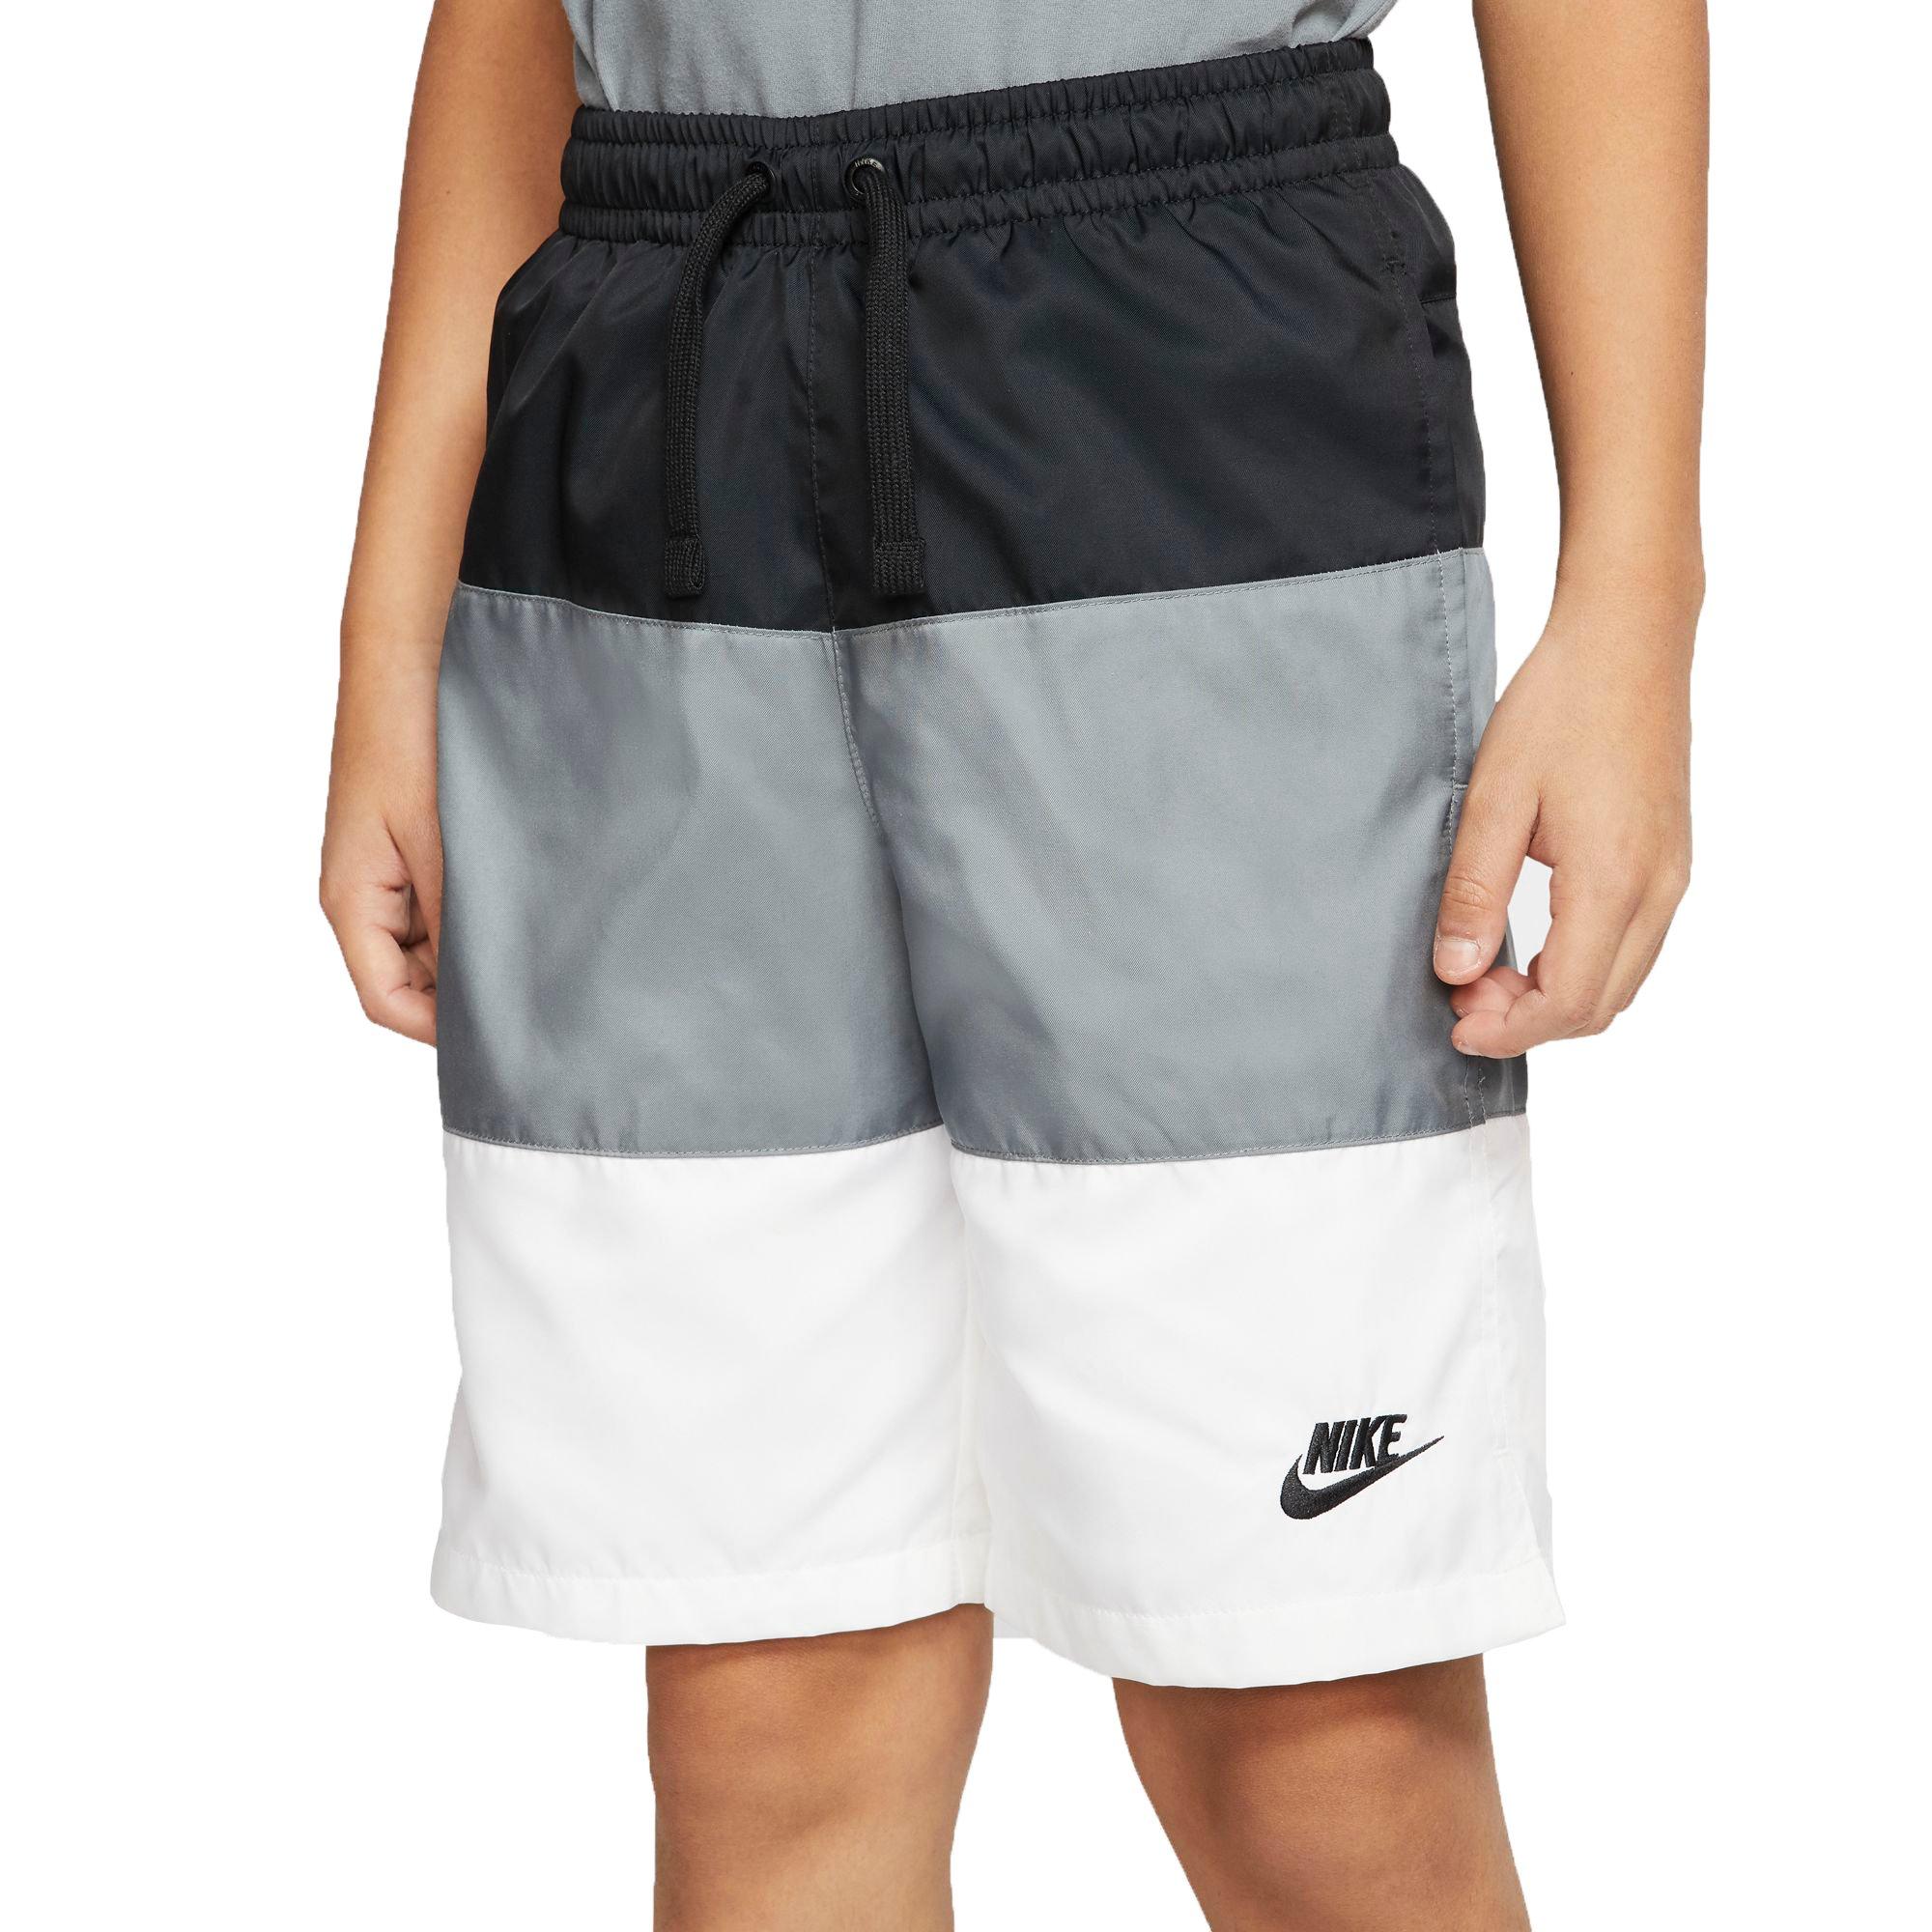 hibbett sports nike shorts